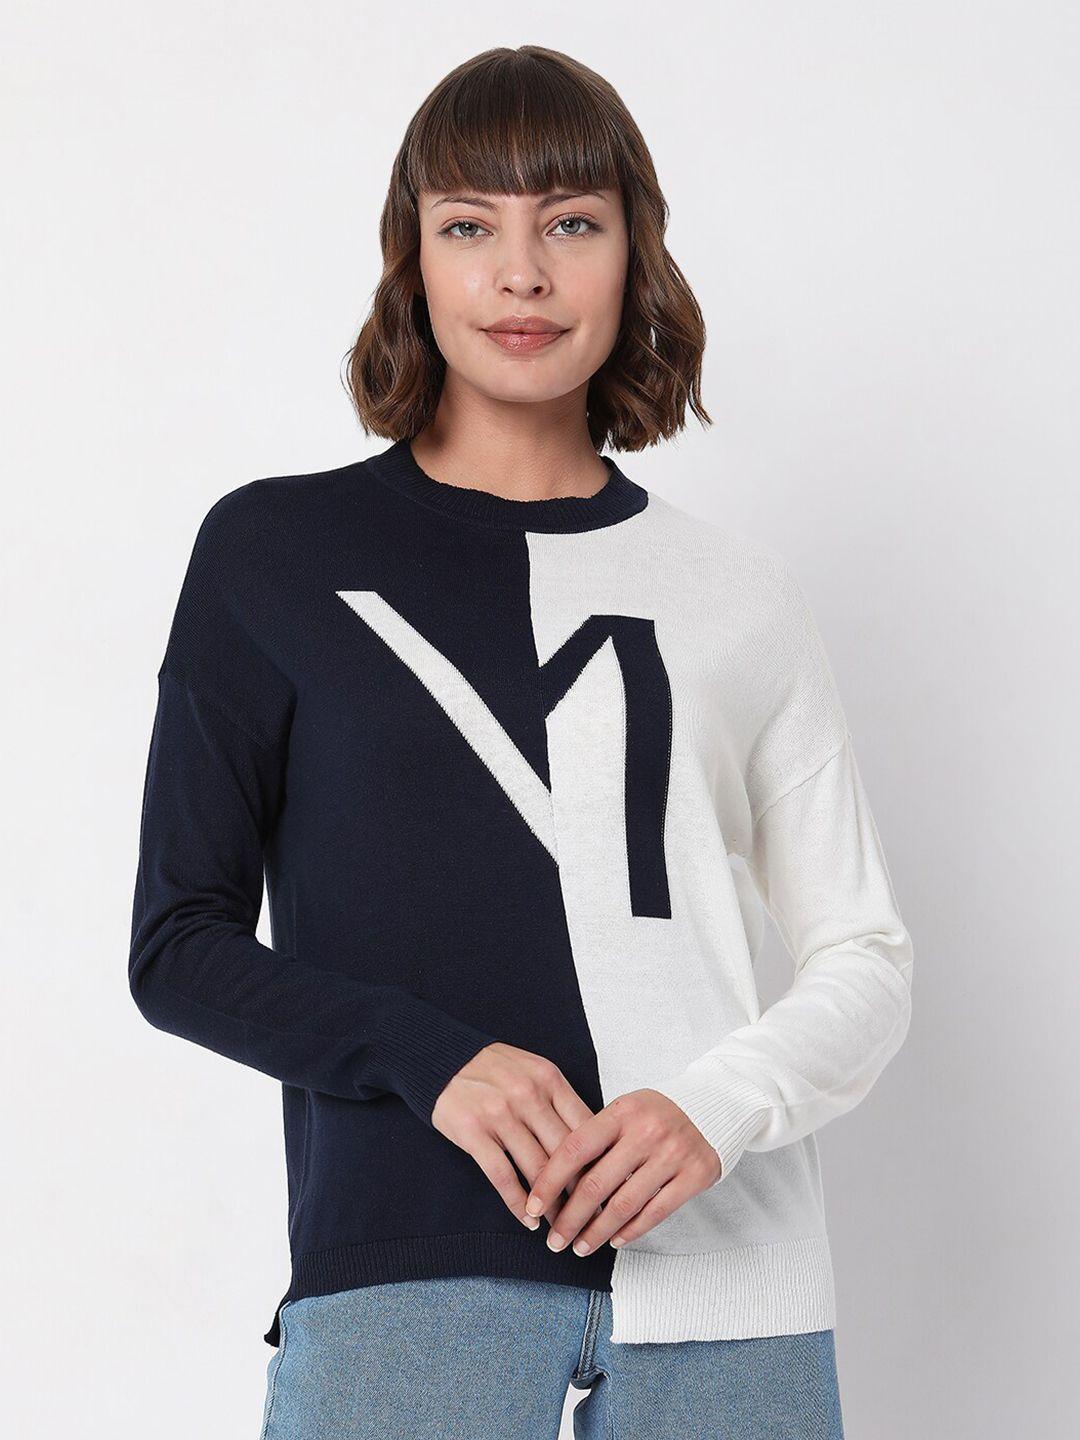 vero-moda-women-white-&-black-colourblocked-sweater